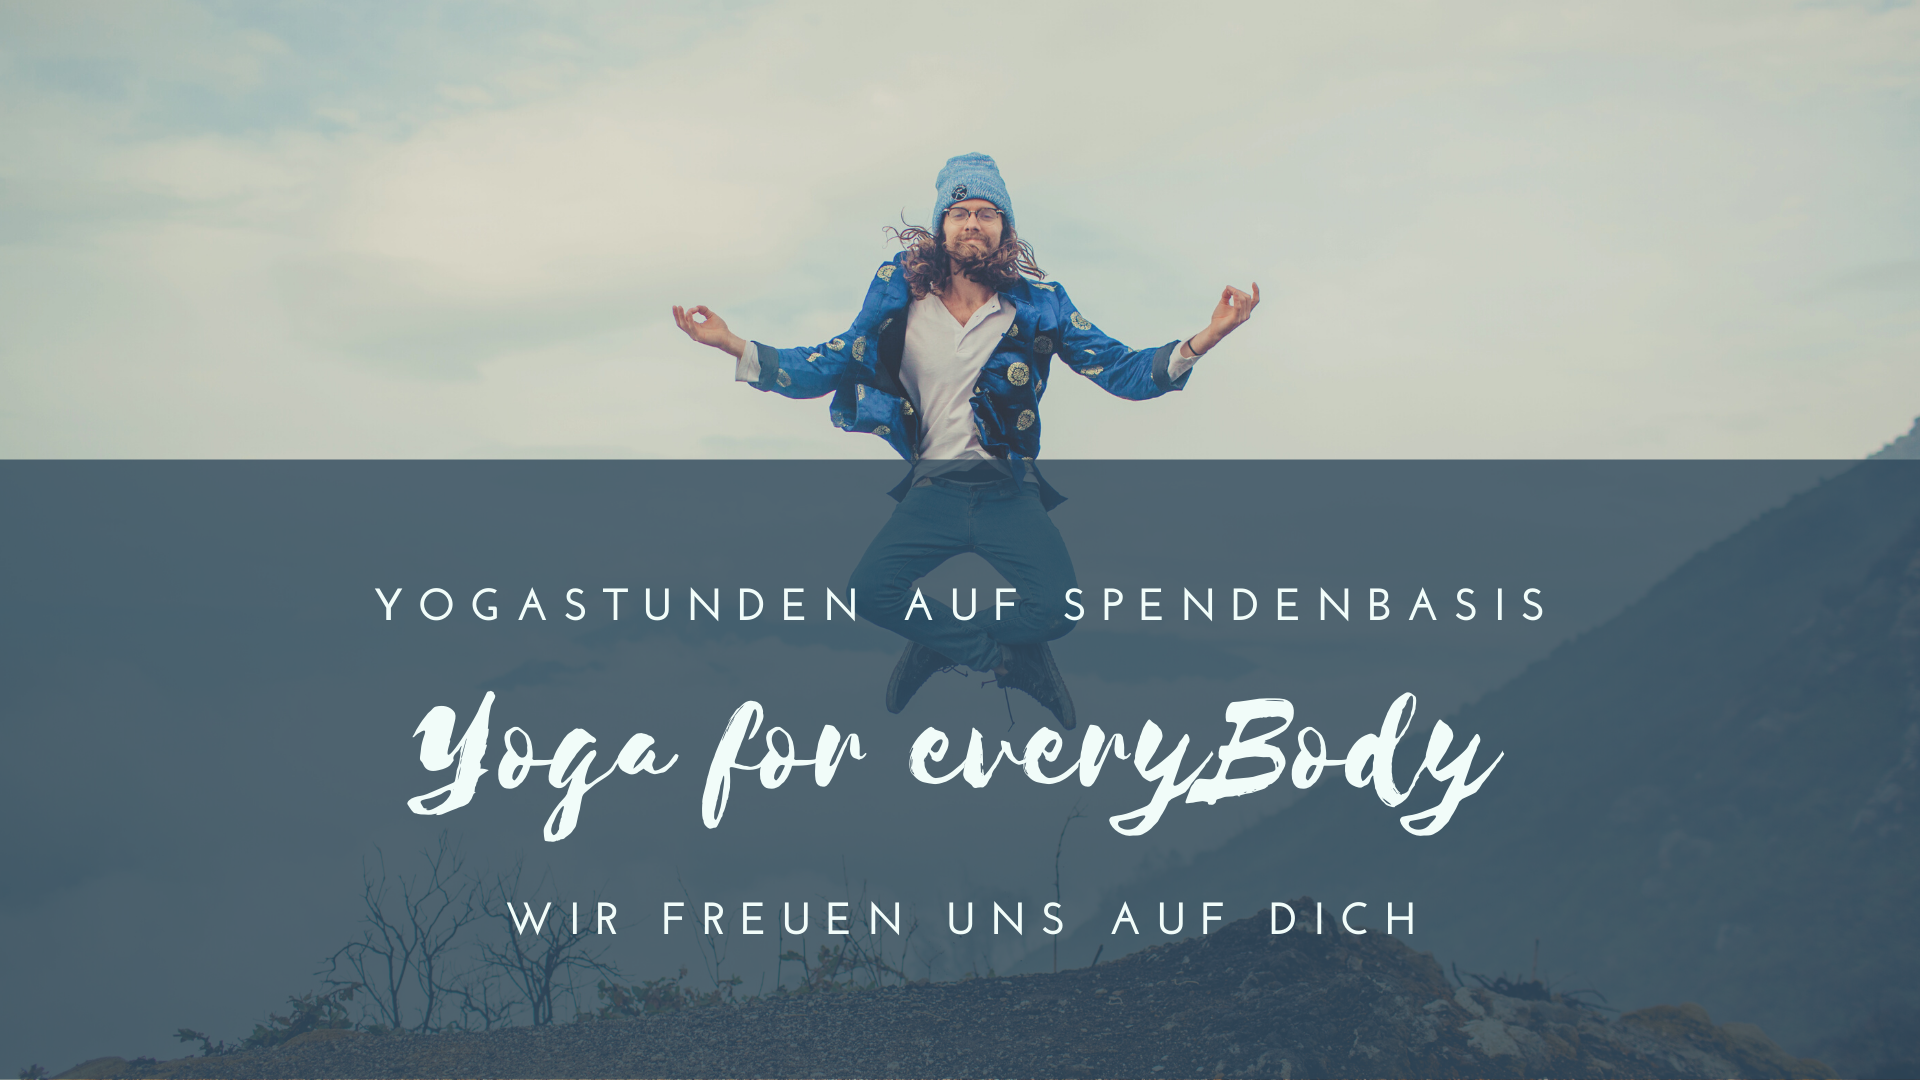 Yoga for everyBody